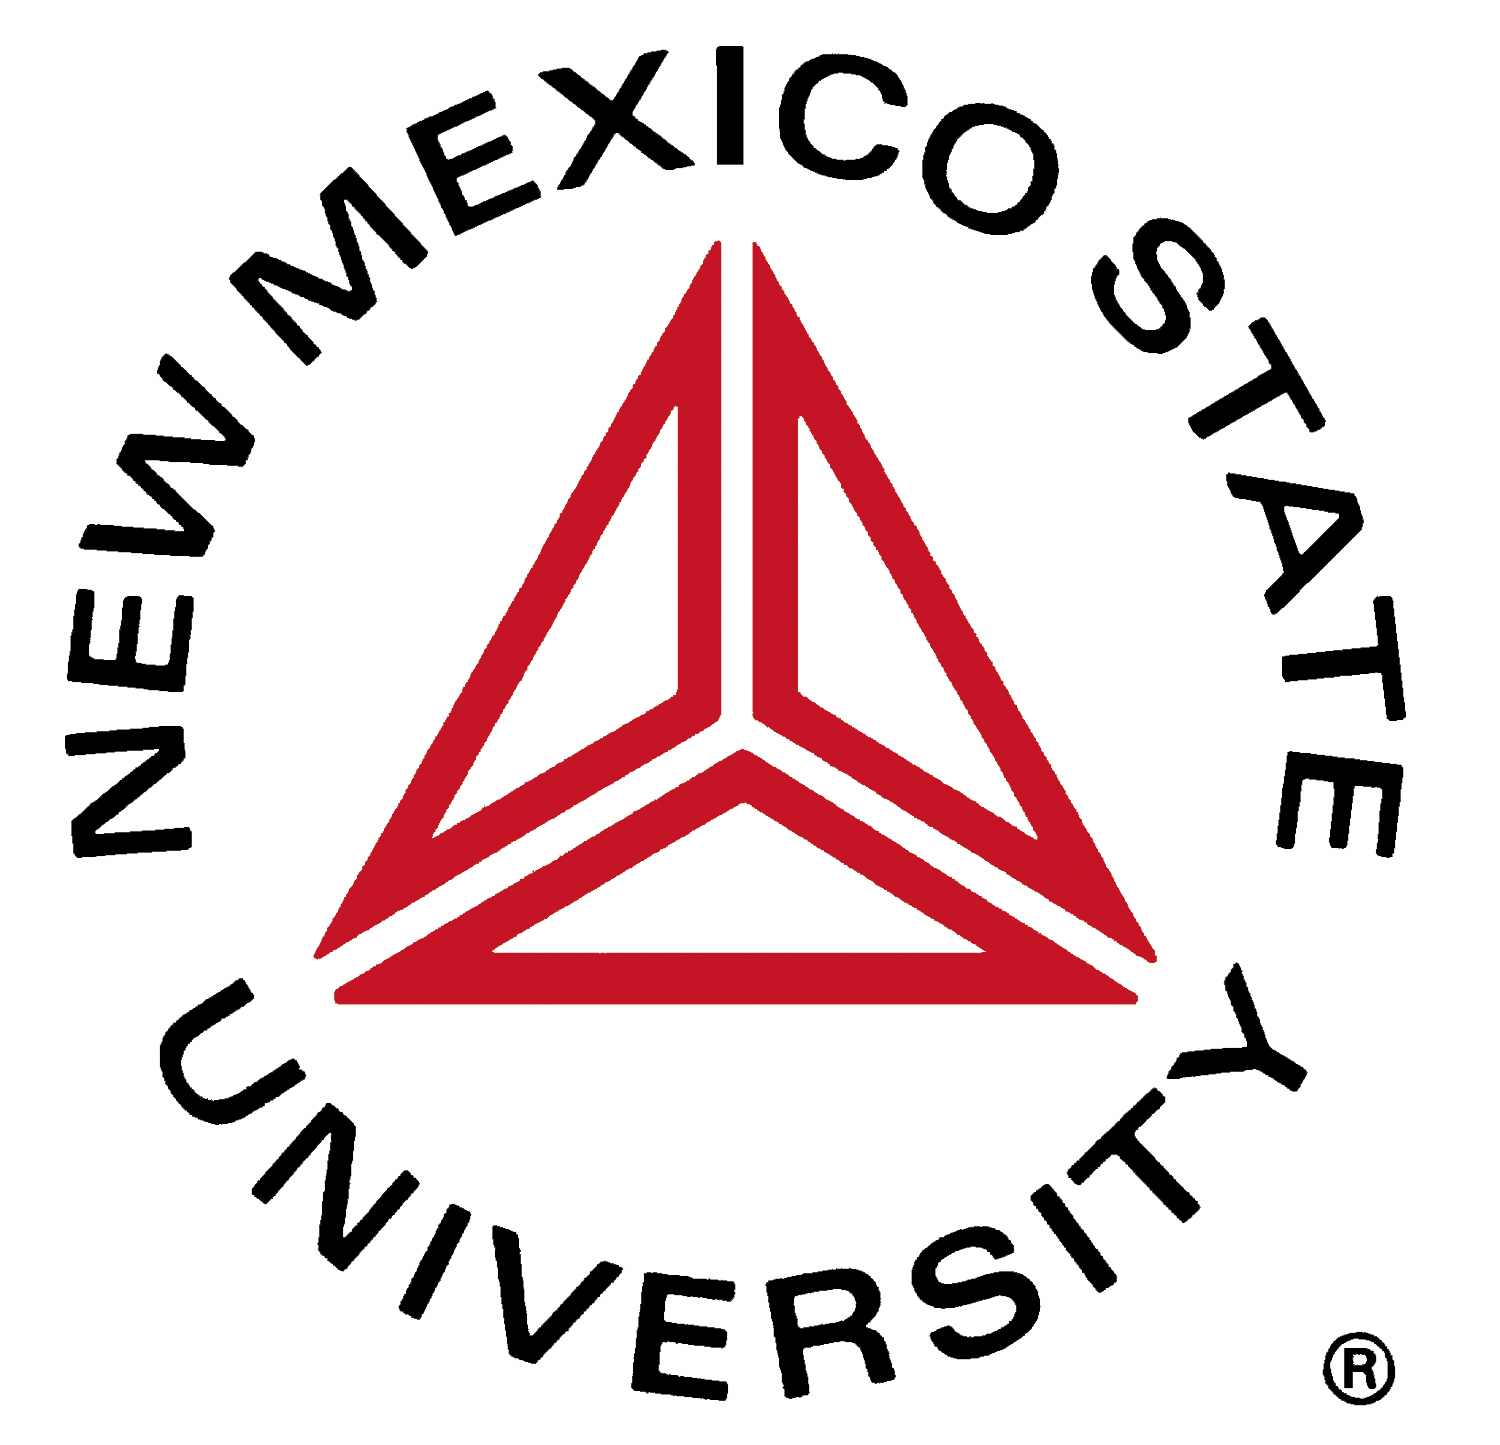 LOGO of New Mexico State University